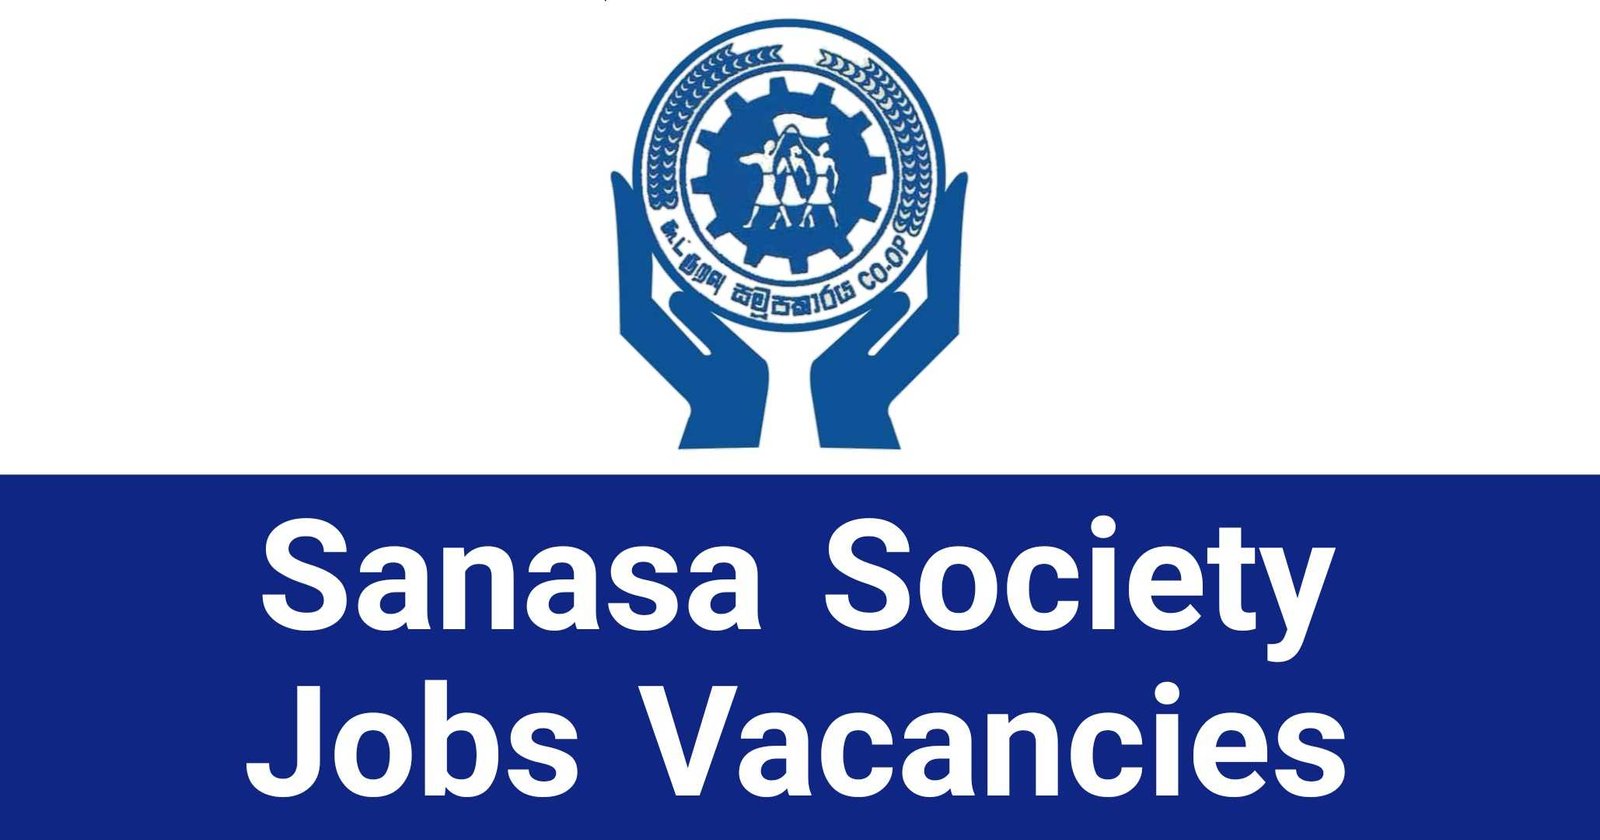 Sanasa Society Jobs Vacancies Recruitments Applications